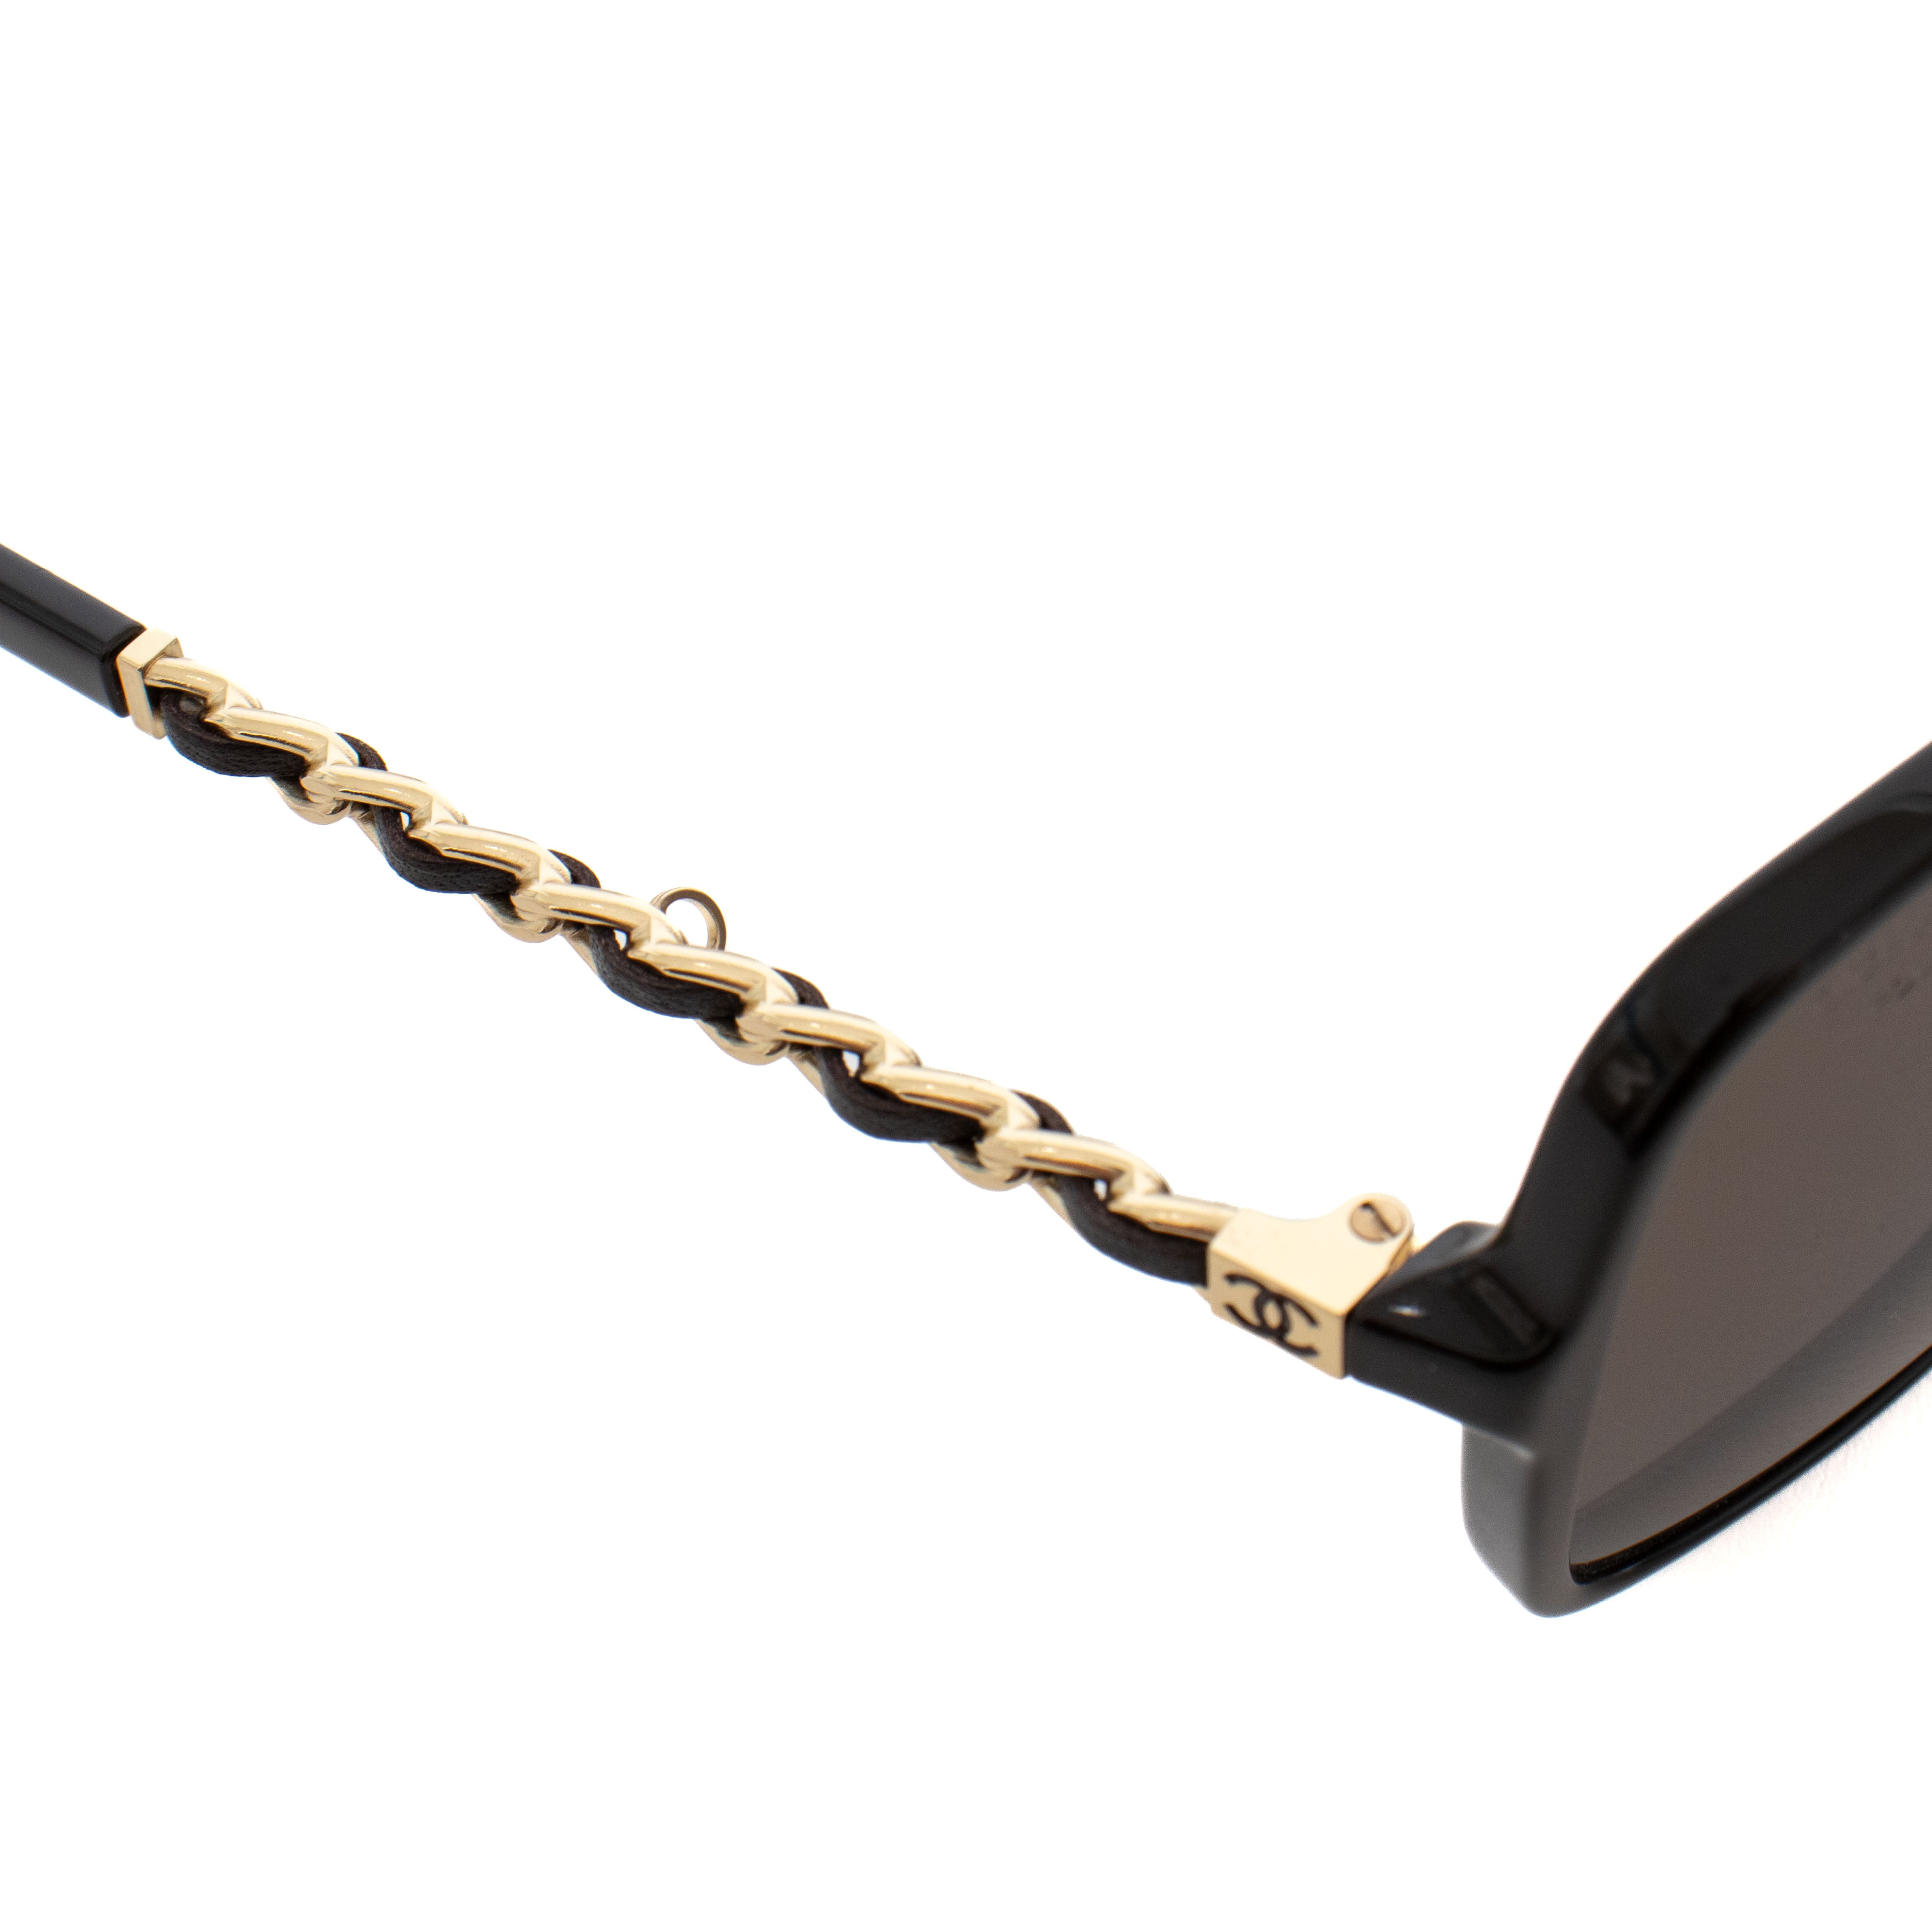 Chocolate Chain Detail Oversized Square Sunglasses